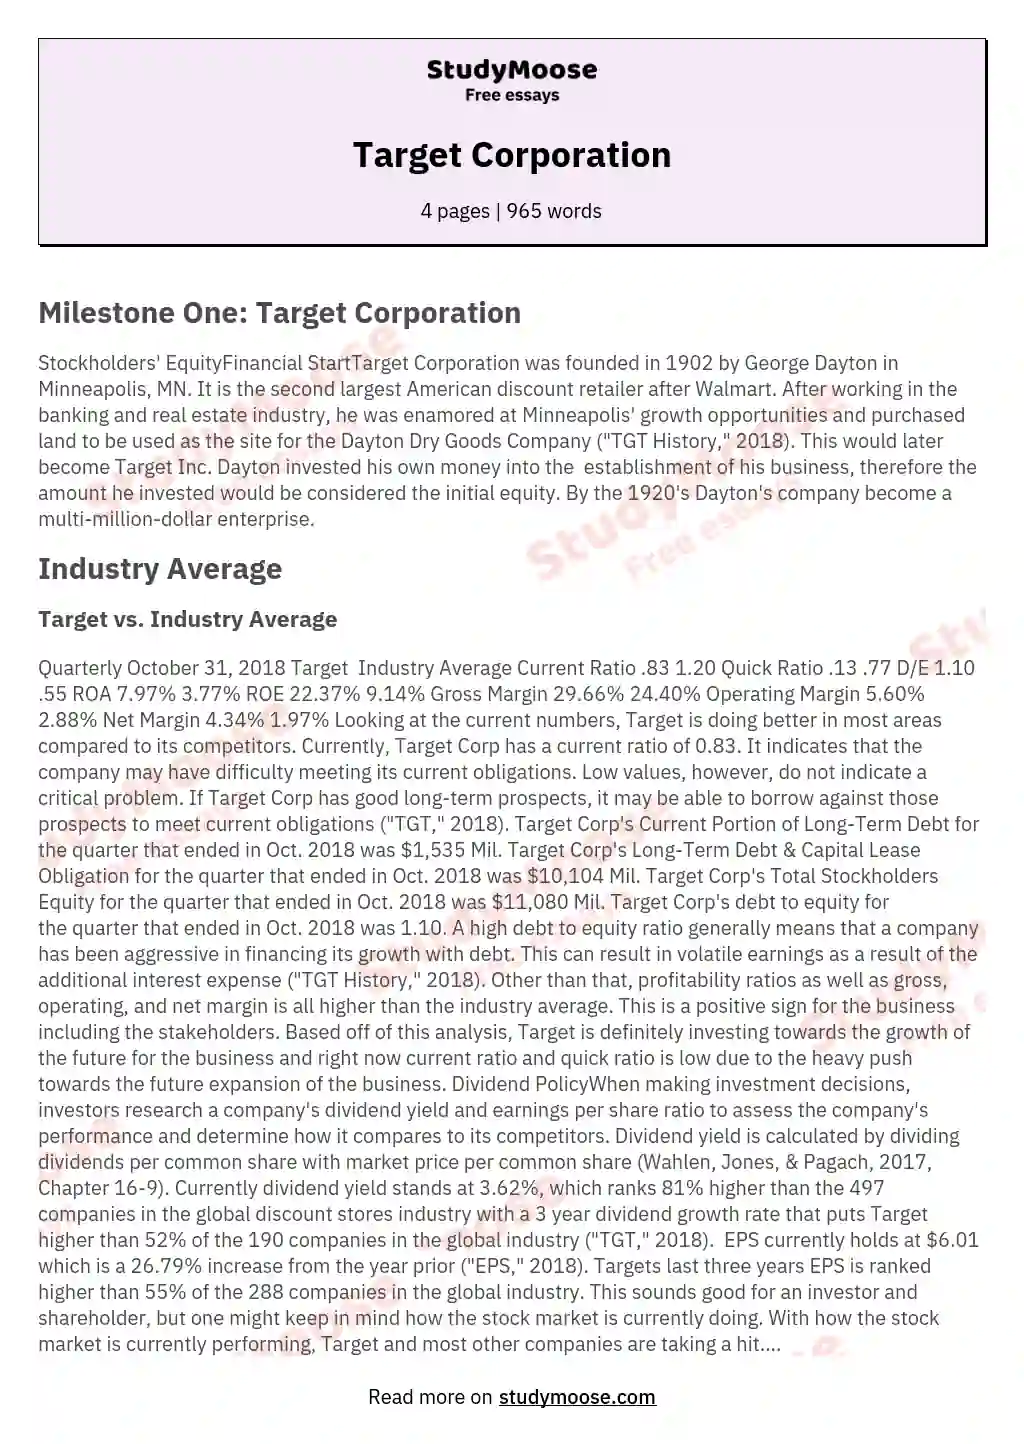 Target Corporation essay